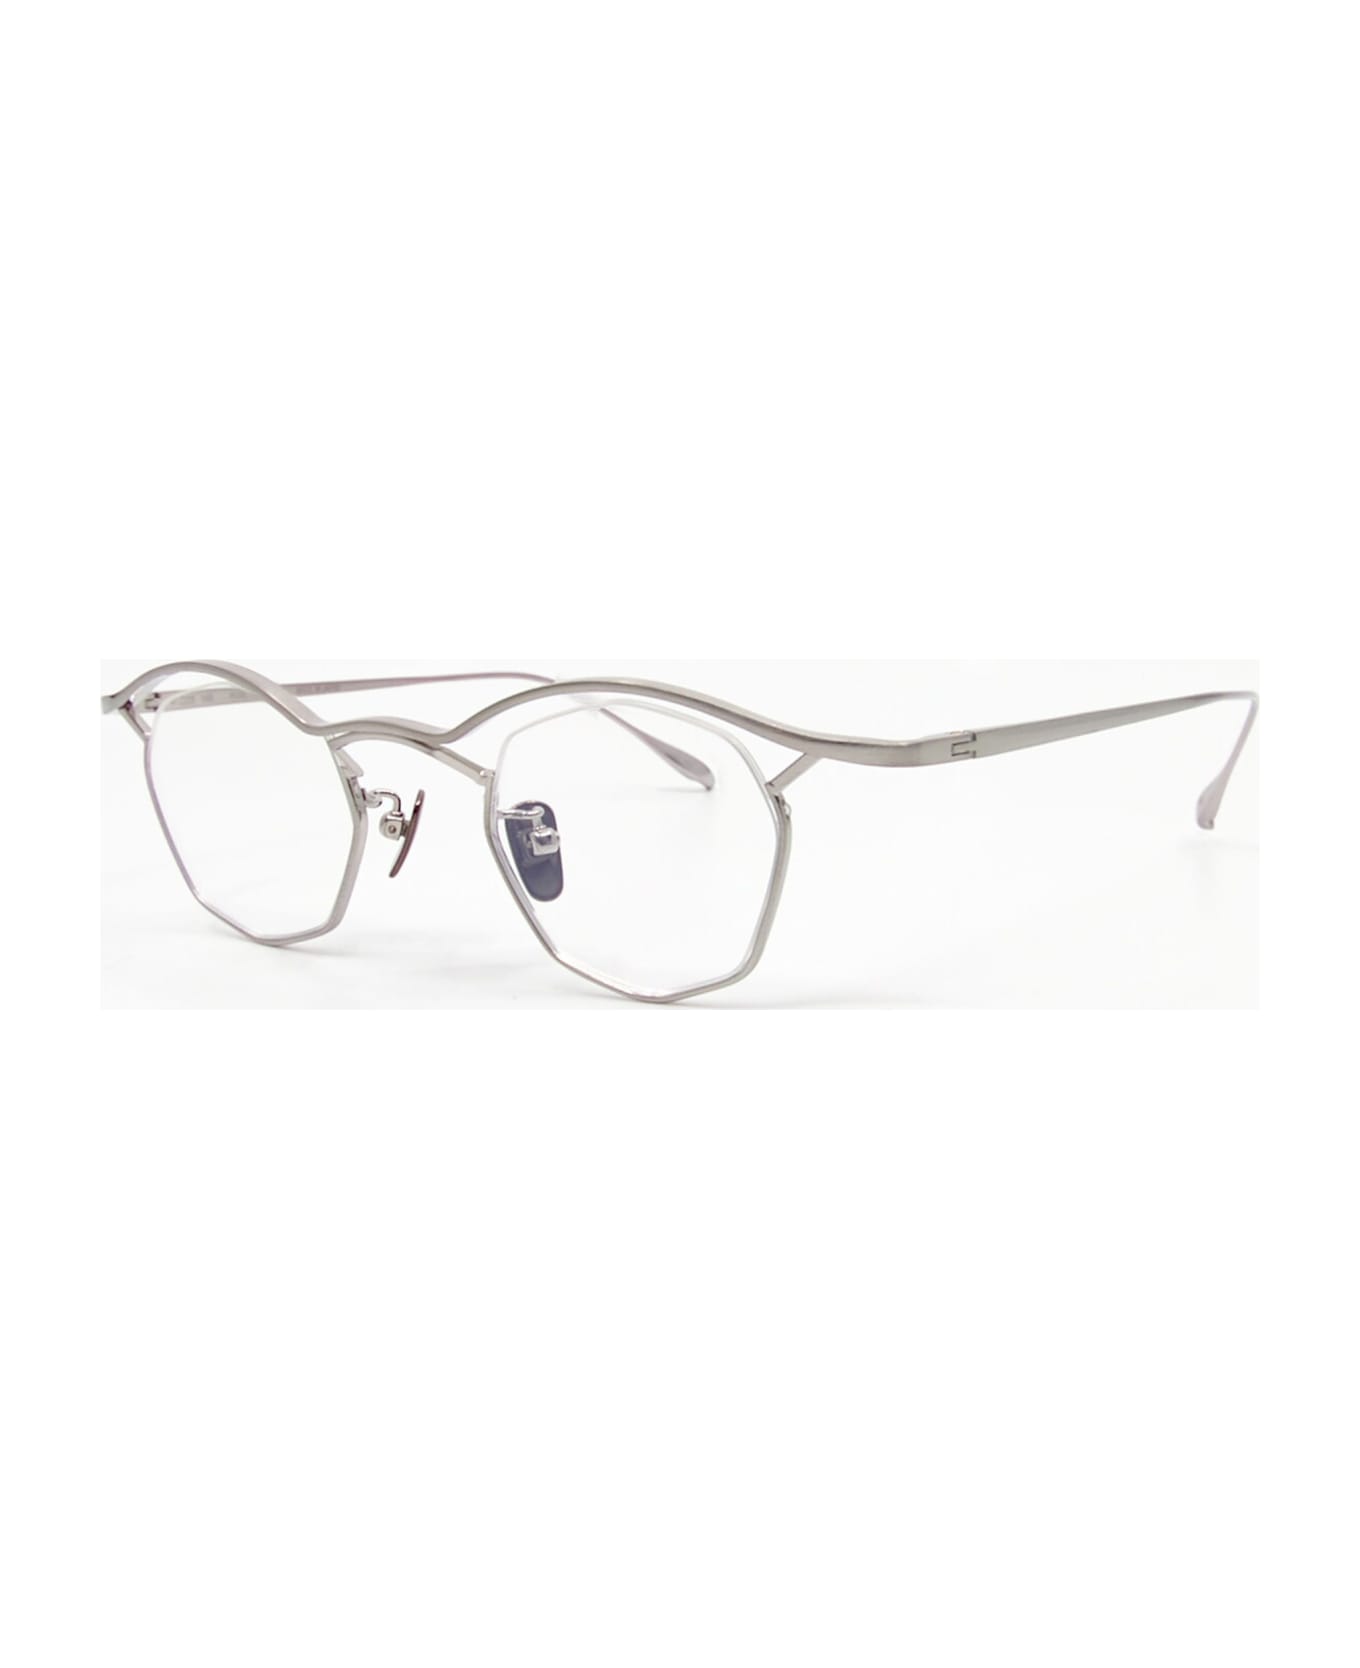 FACTORY900 Titanos X Factory900 Mf-002 - Silver Rx Glasses - Silver